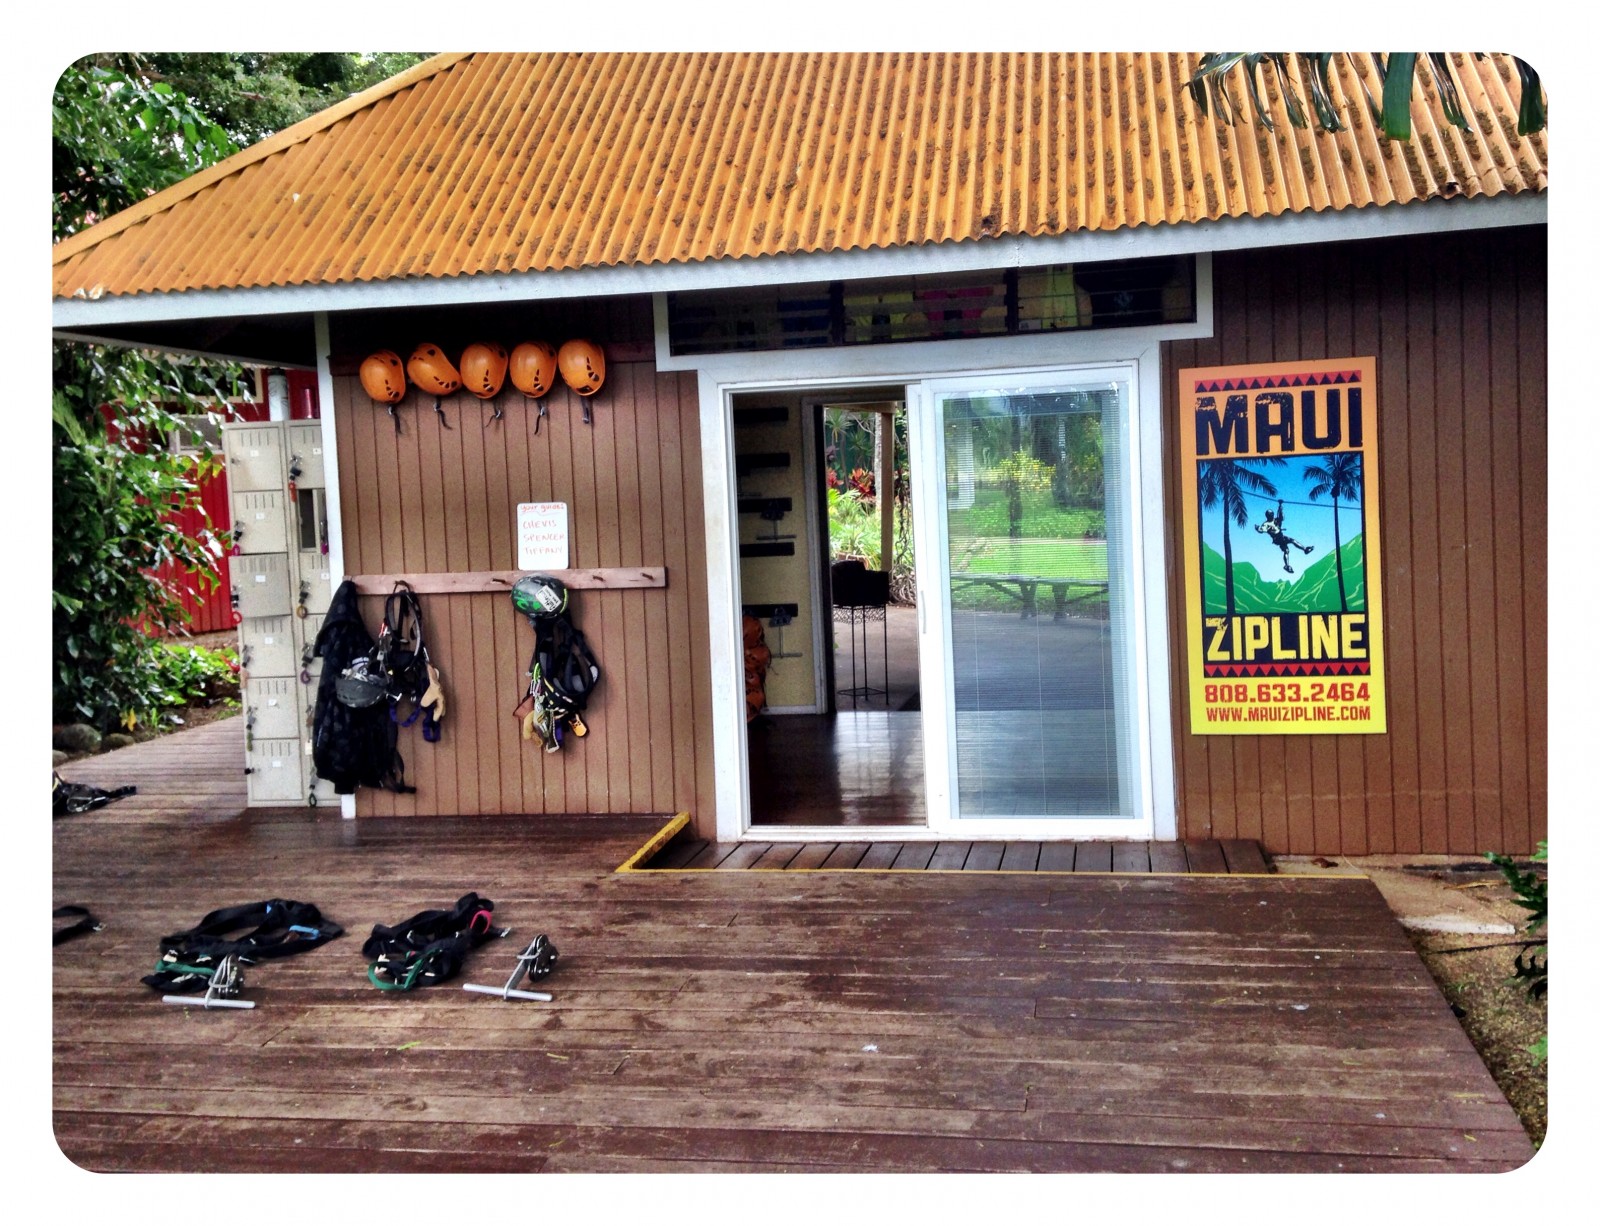 Maui Zipline Company is Hands Down a Wonderful Adventure |Sharon the Moments Blog